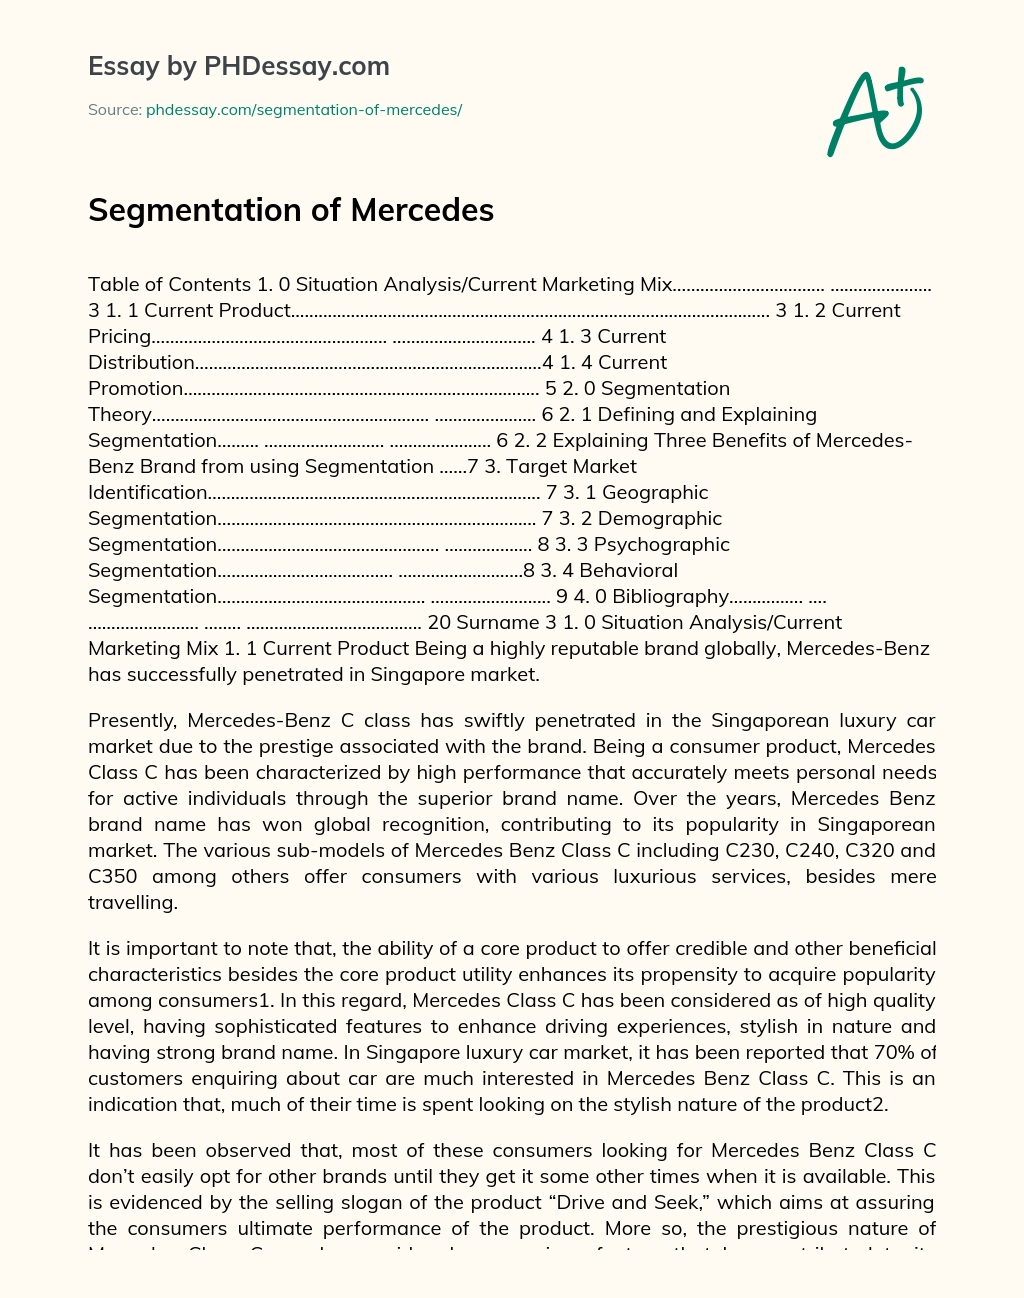 Segmentation of Mercedes essay